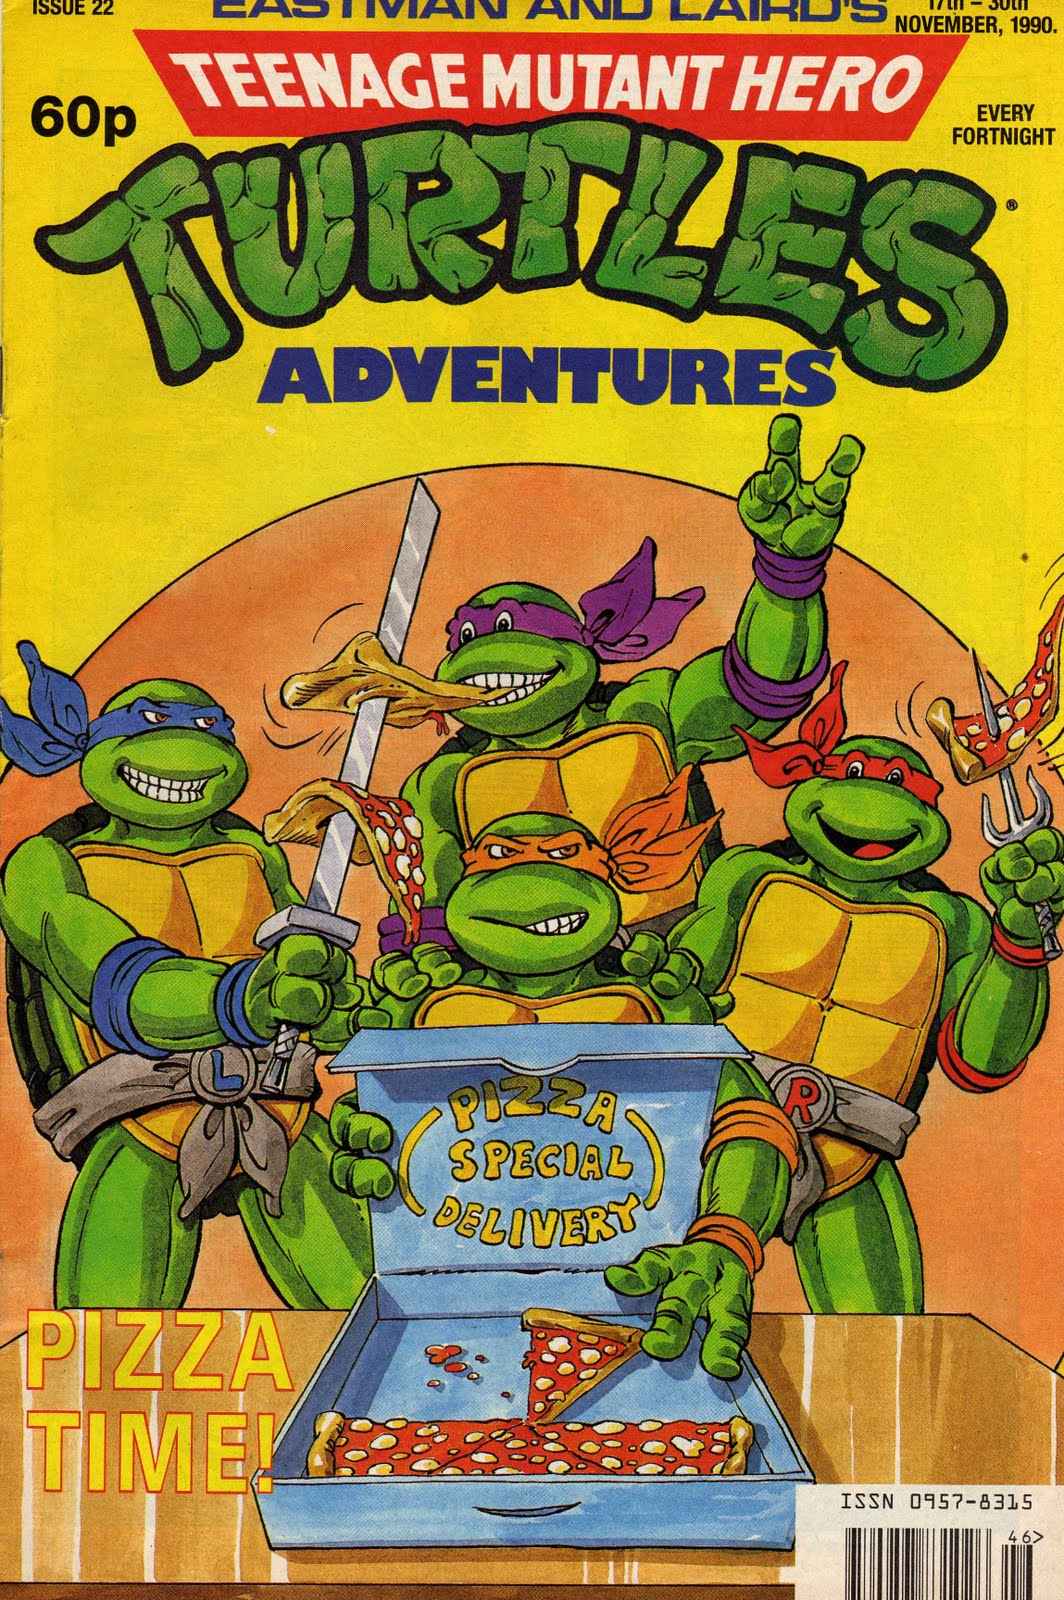 Teenage Mutant Hero Turtles Adventures issue 22 - Page 1